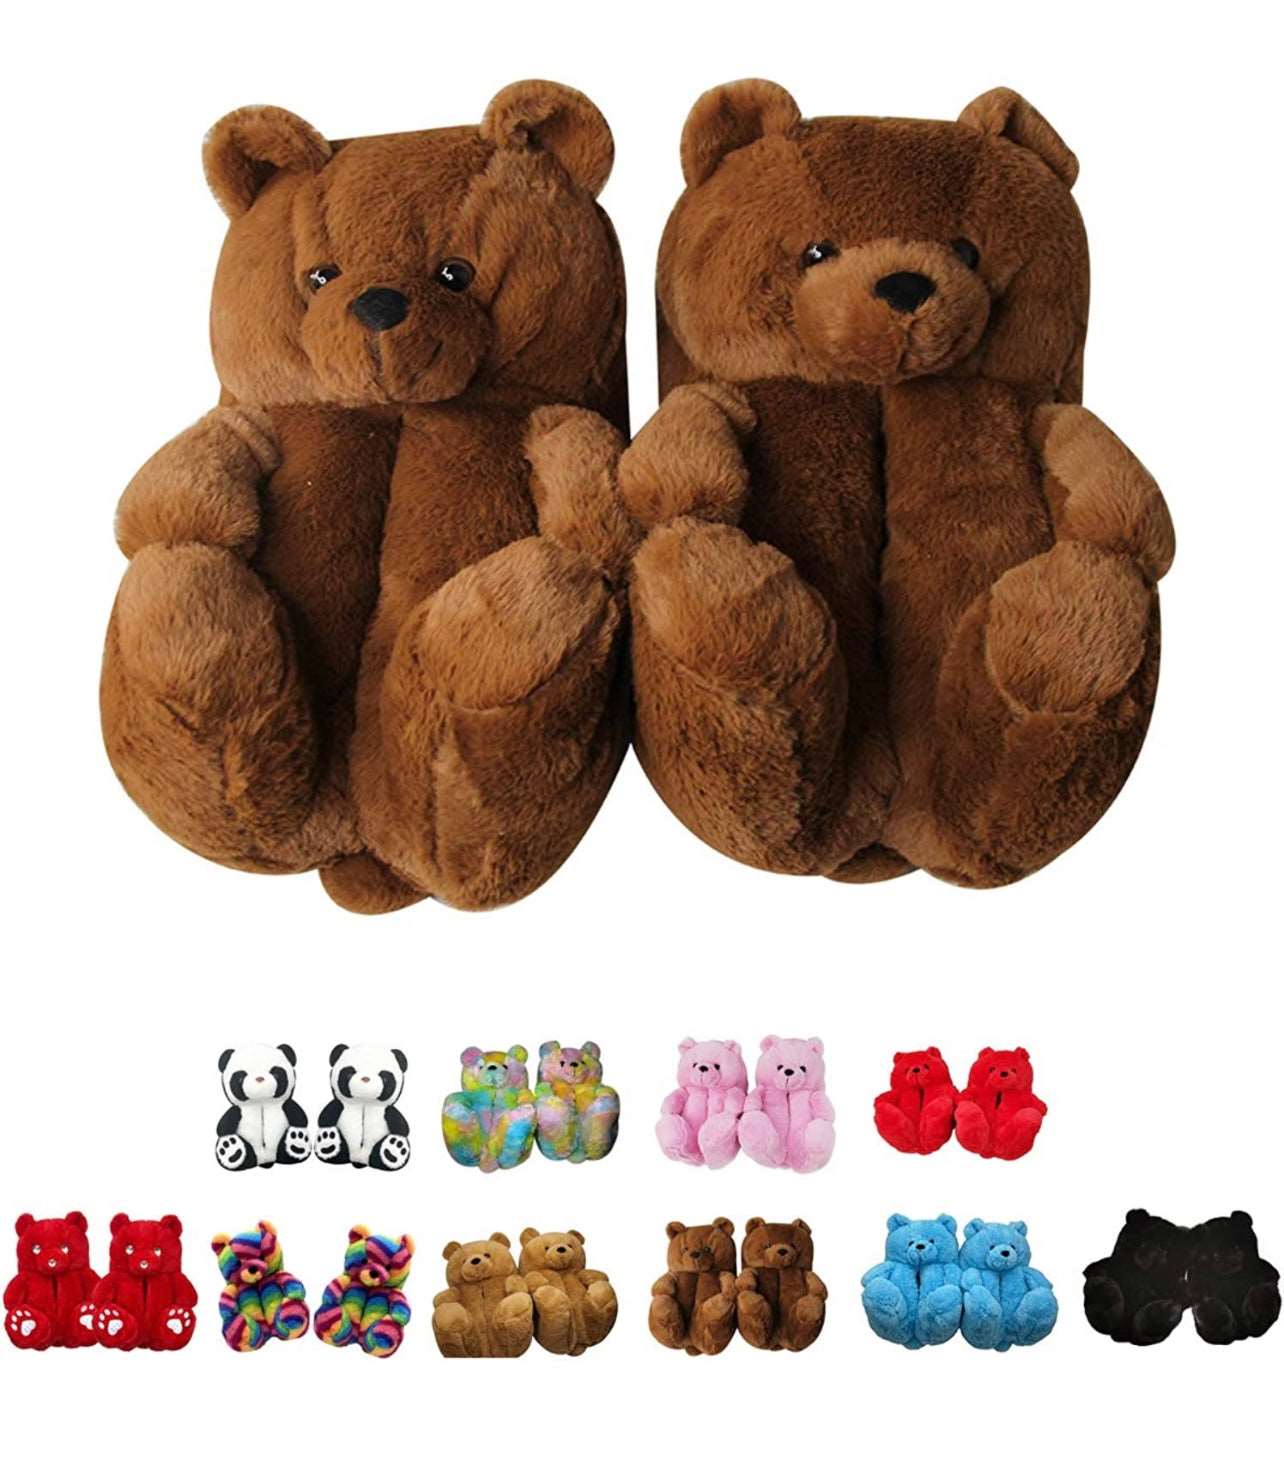 Teddy bear slippers - Slayed by Meme